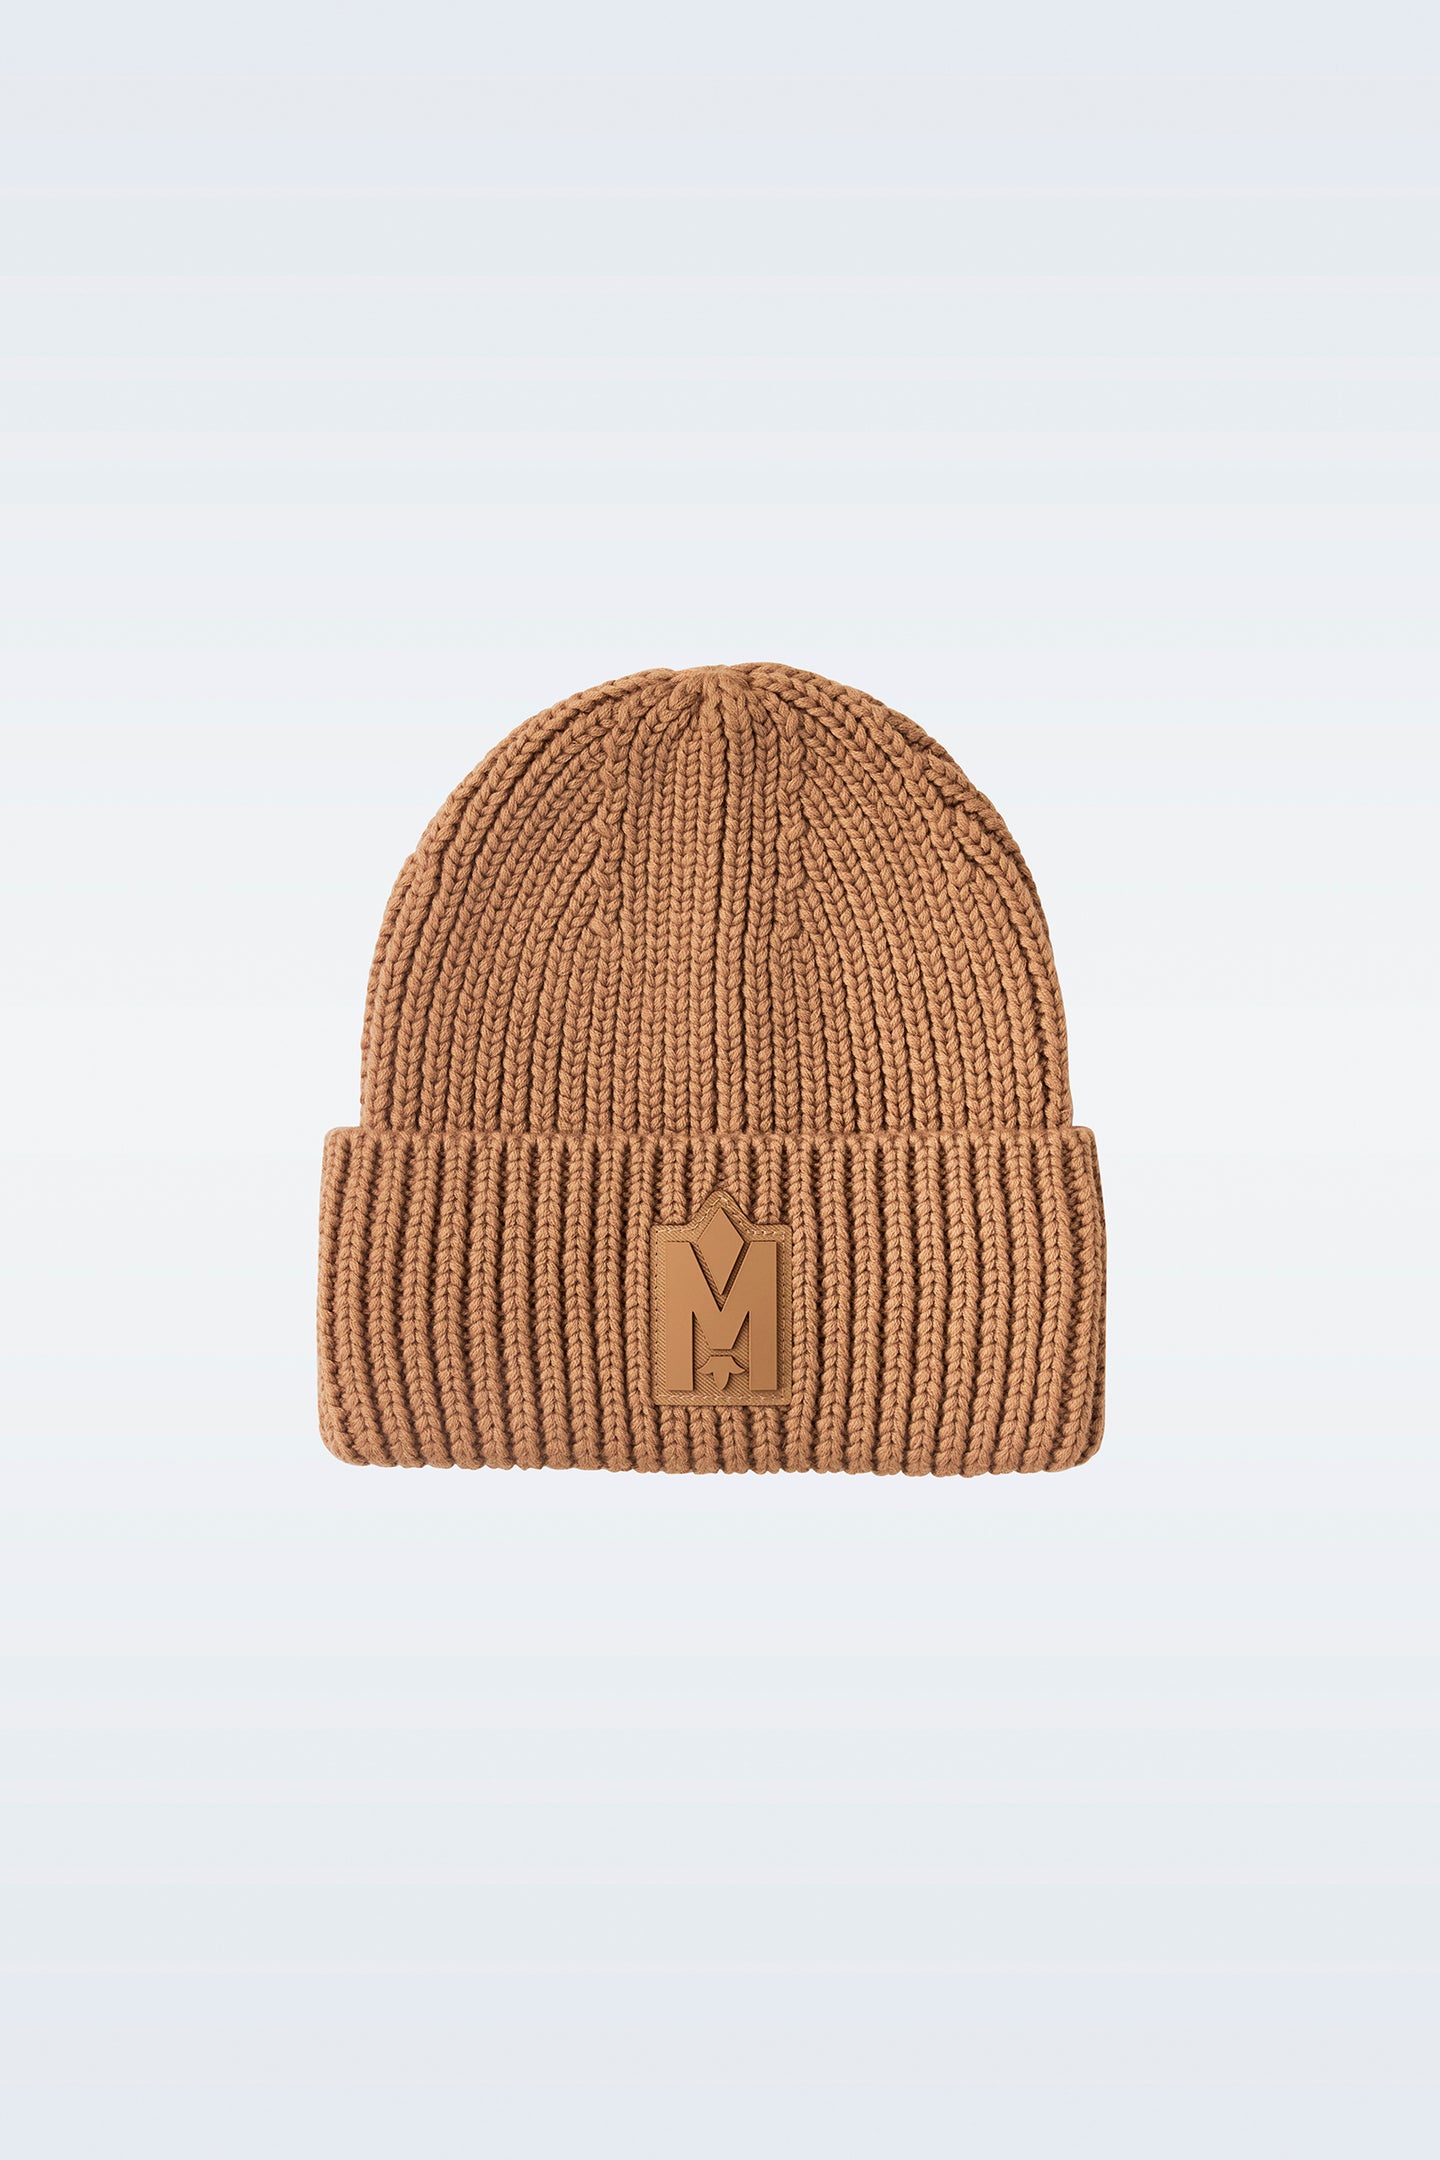 Shop Louis Vuitton Unisex Street Style Knit Hats (RIB FLOWER